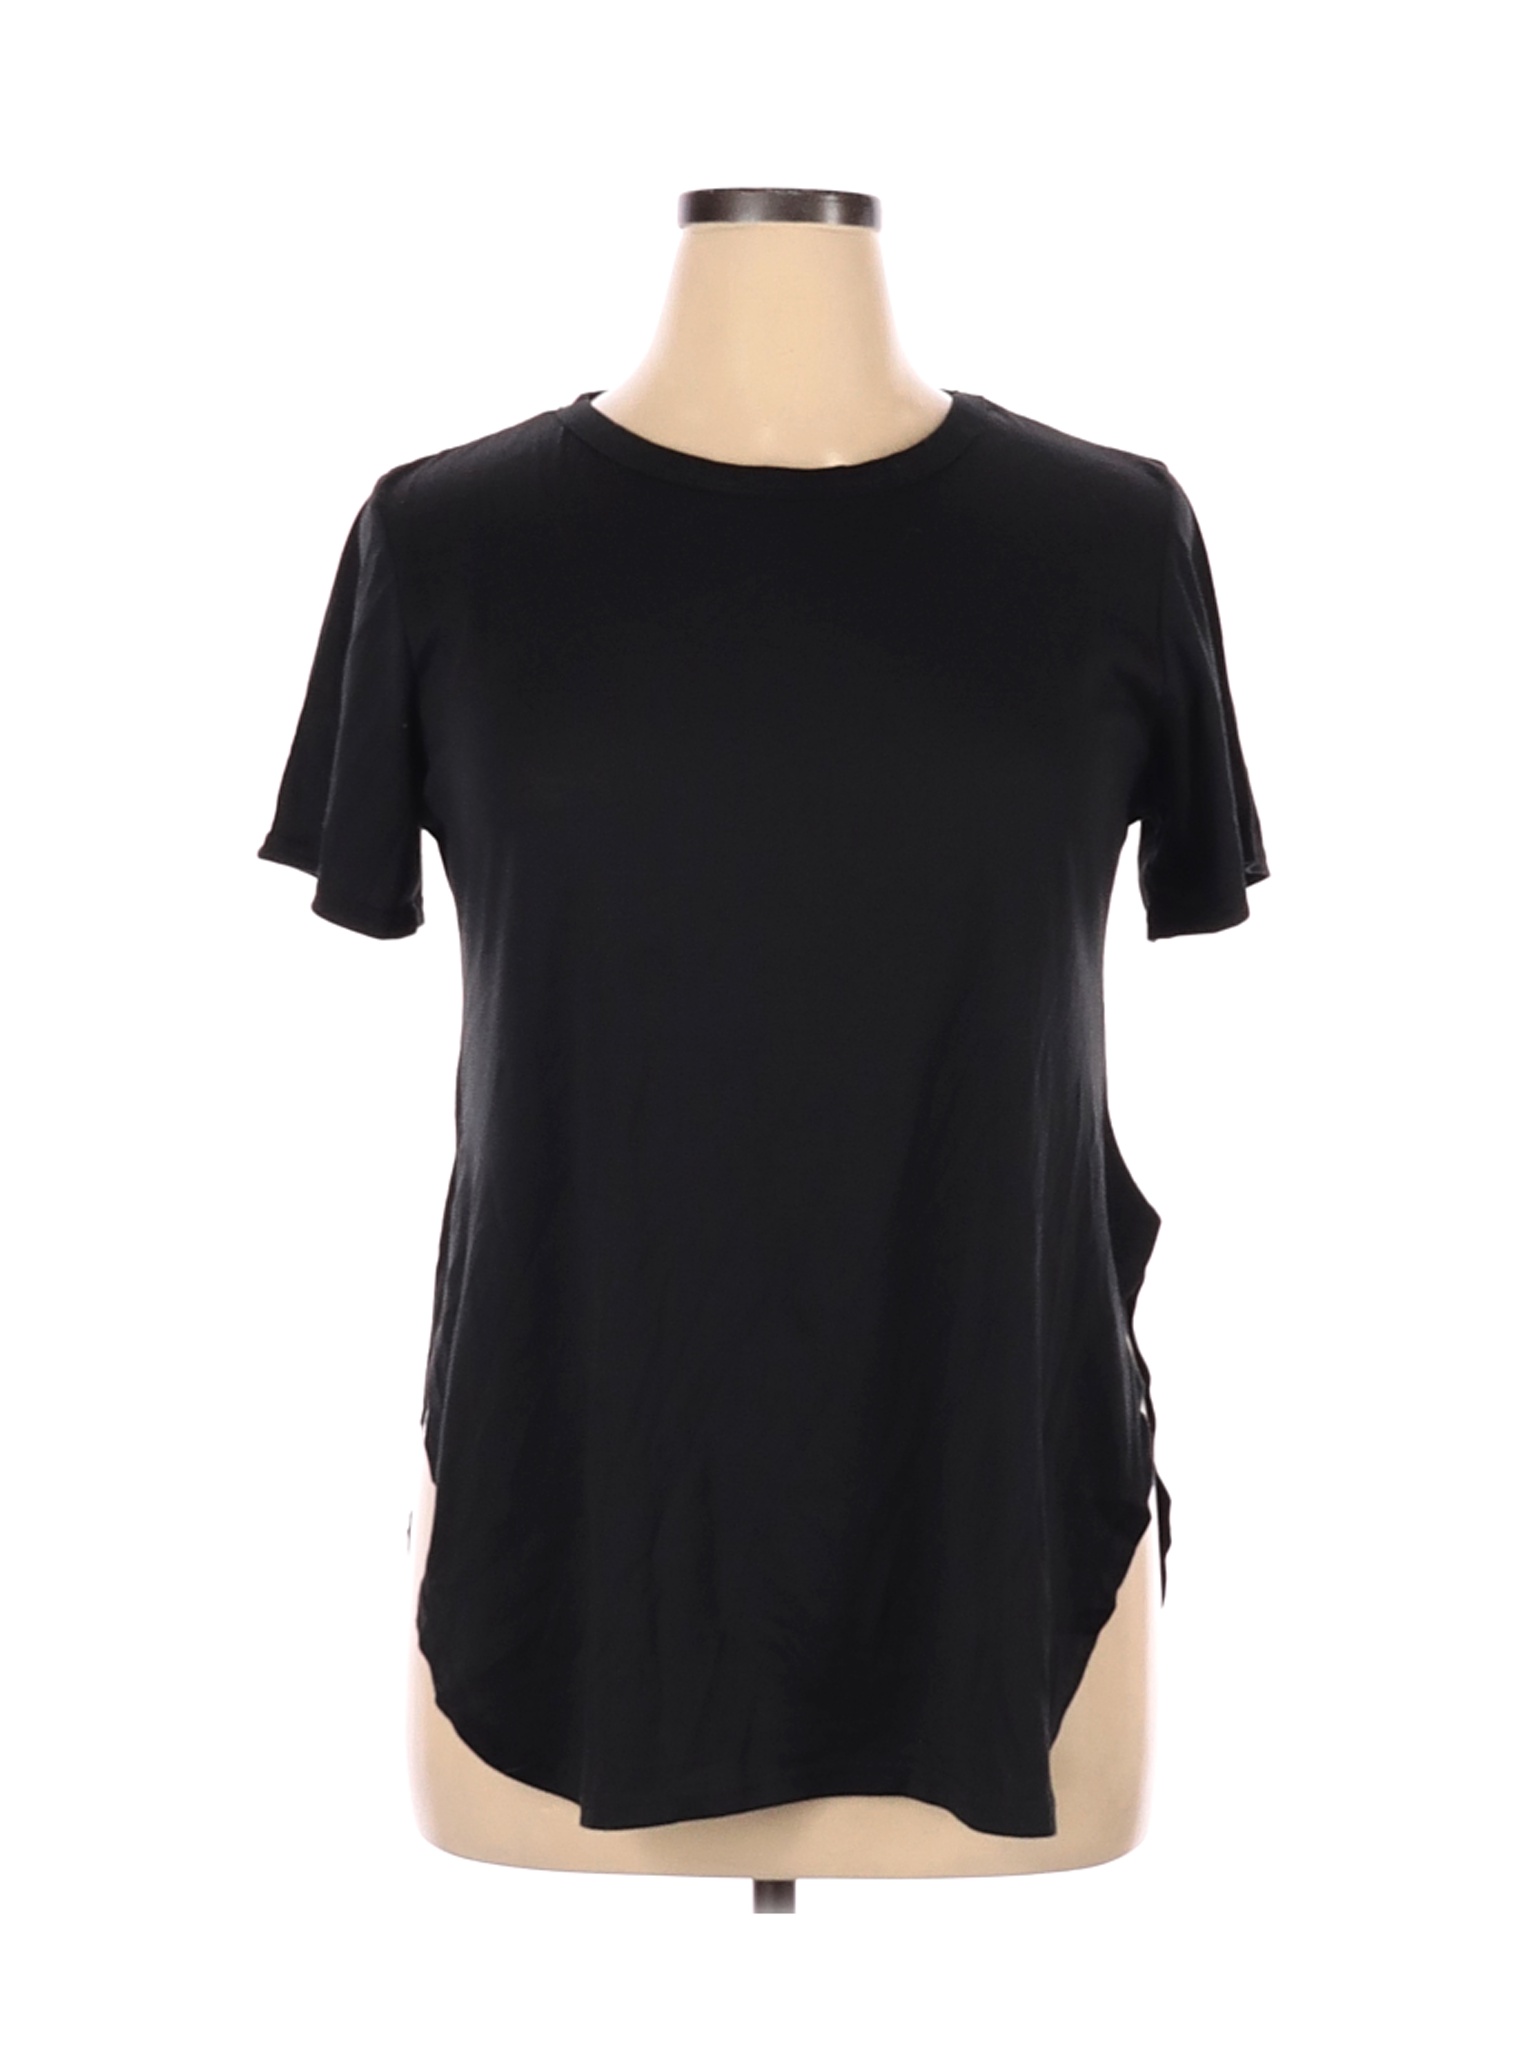 Shein Women Black Short Sleeve T-Shirt 0X Plus | eBay